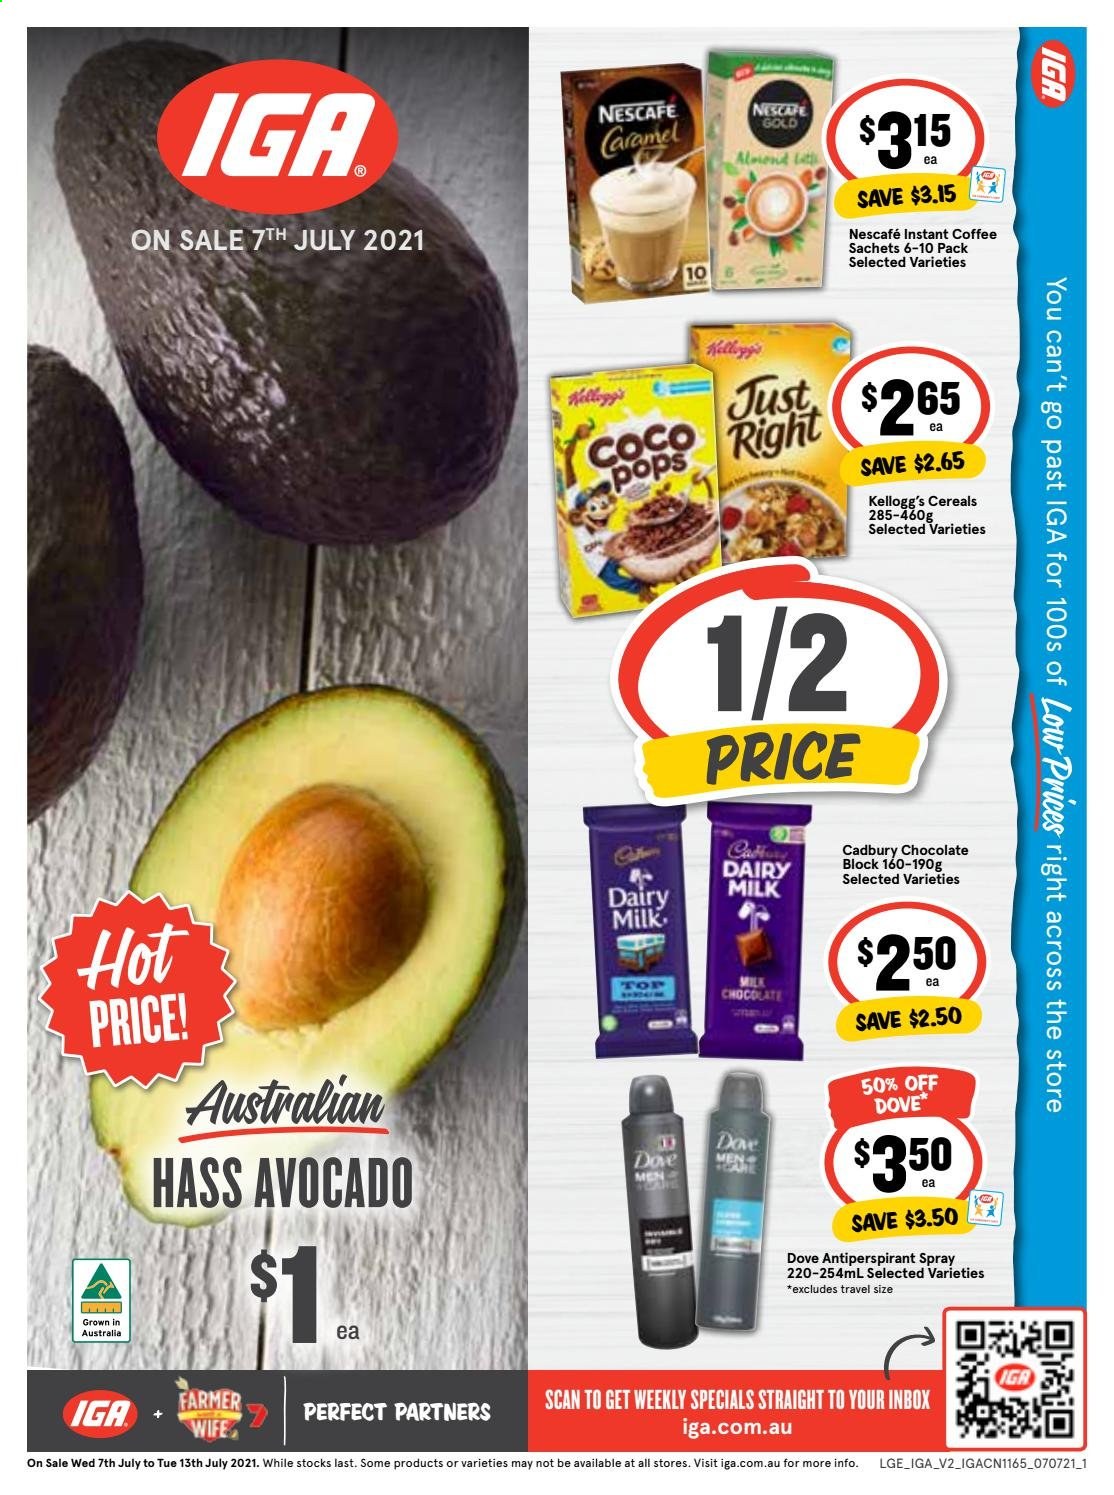 thumbnail - IGA Catalogue - 7 Jul 2021 - 13 Jul 2021 - Sales products - avocado, milk chocolate, chocolate, Kellogg's, Cadbury, Dairy Milk, cereals, coco pops, instant coffee, Nescafé, Dove, anti-perspirant. Page 1.